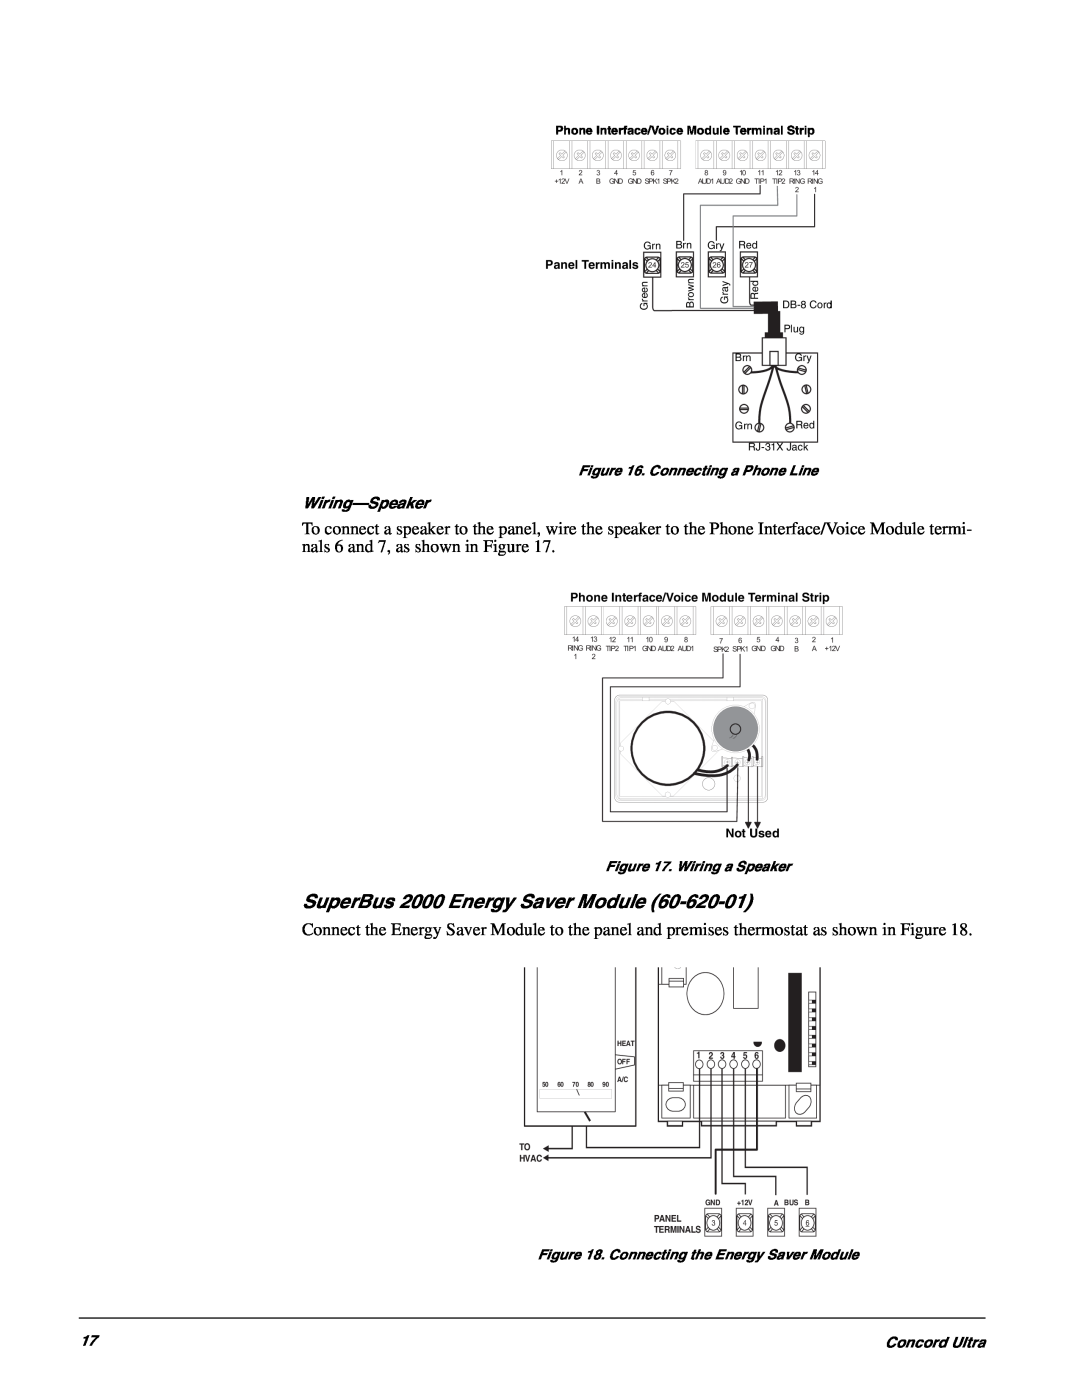 GE 60-960-95 installation instructions SuperBus 2000 Energy Saver Module, Wiring-Speaker 